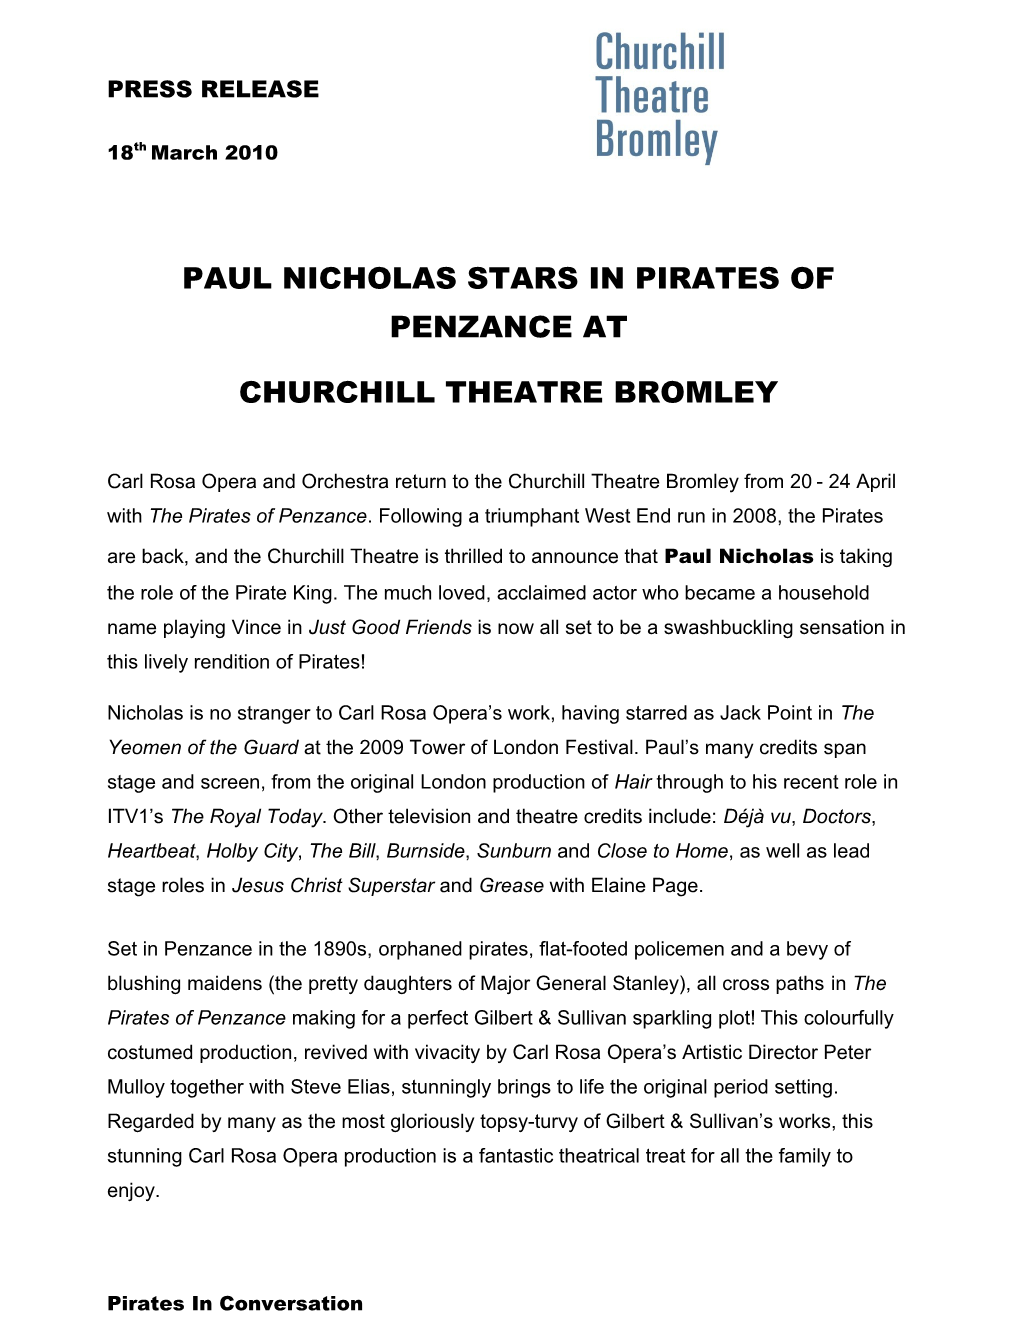 Paul Nicholas Stars in Pirates of Penzance At